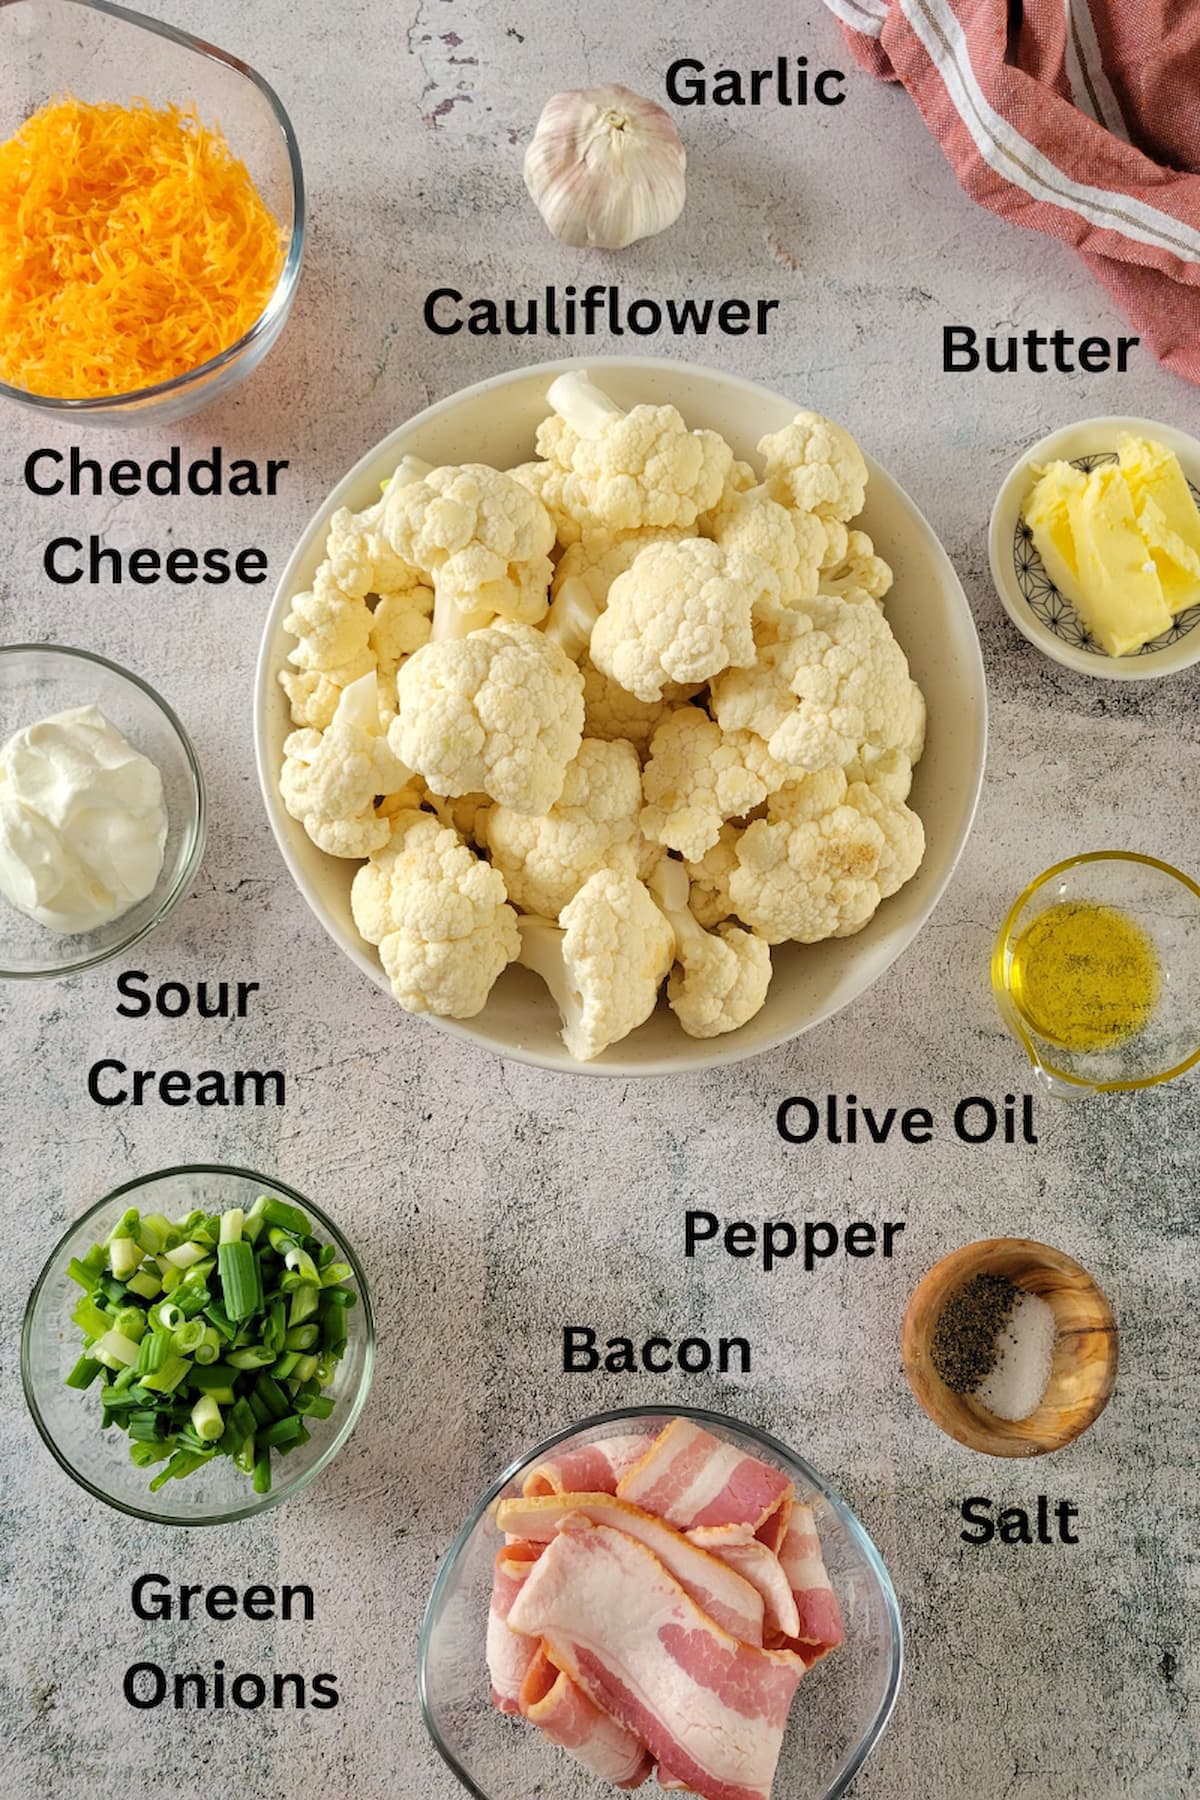 ingredients for mashed cauliflower recipe - garlic, salt, pepper, cauliflower, bacon, green onions, butter, cheddar cheese, sour cream, olive oil